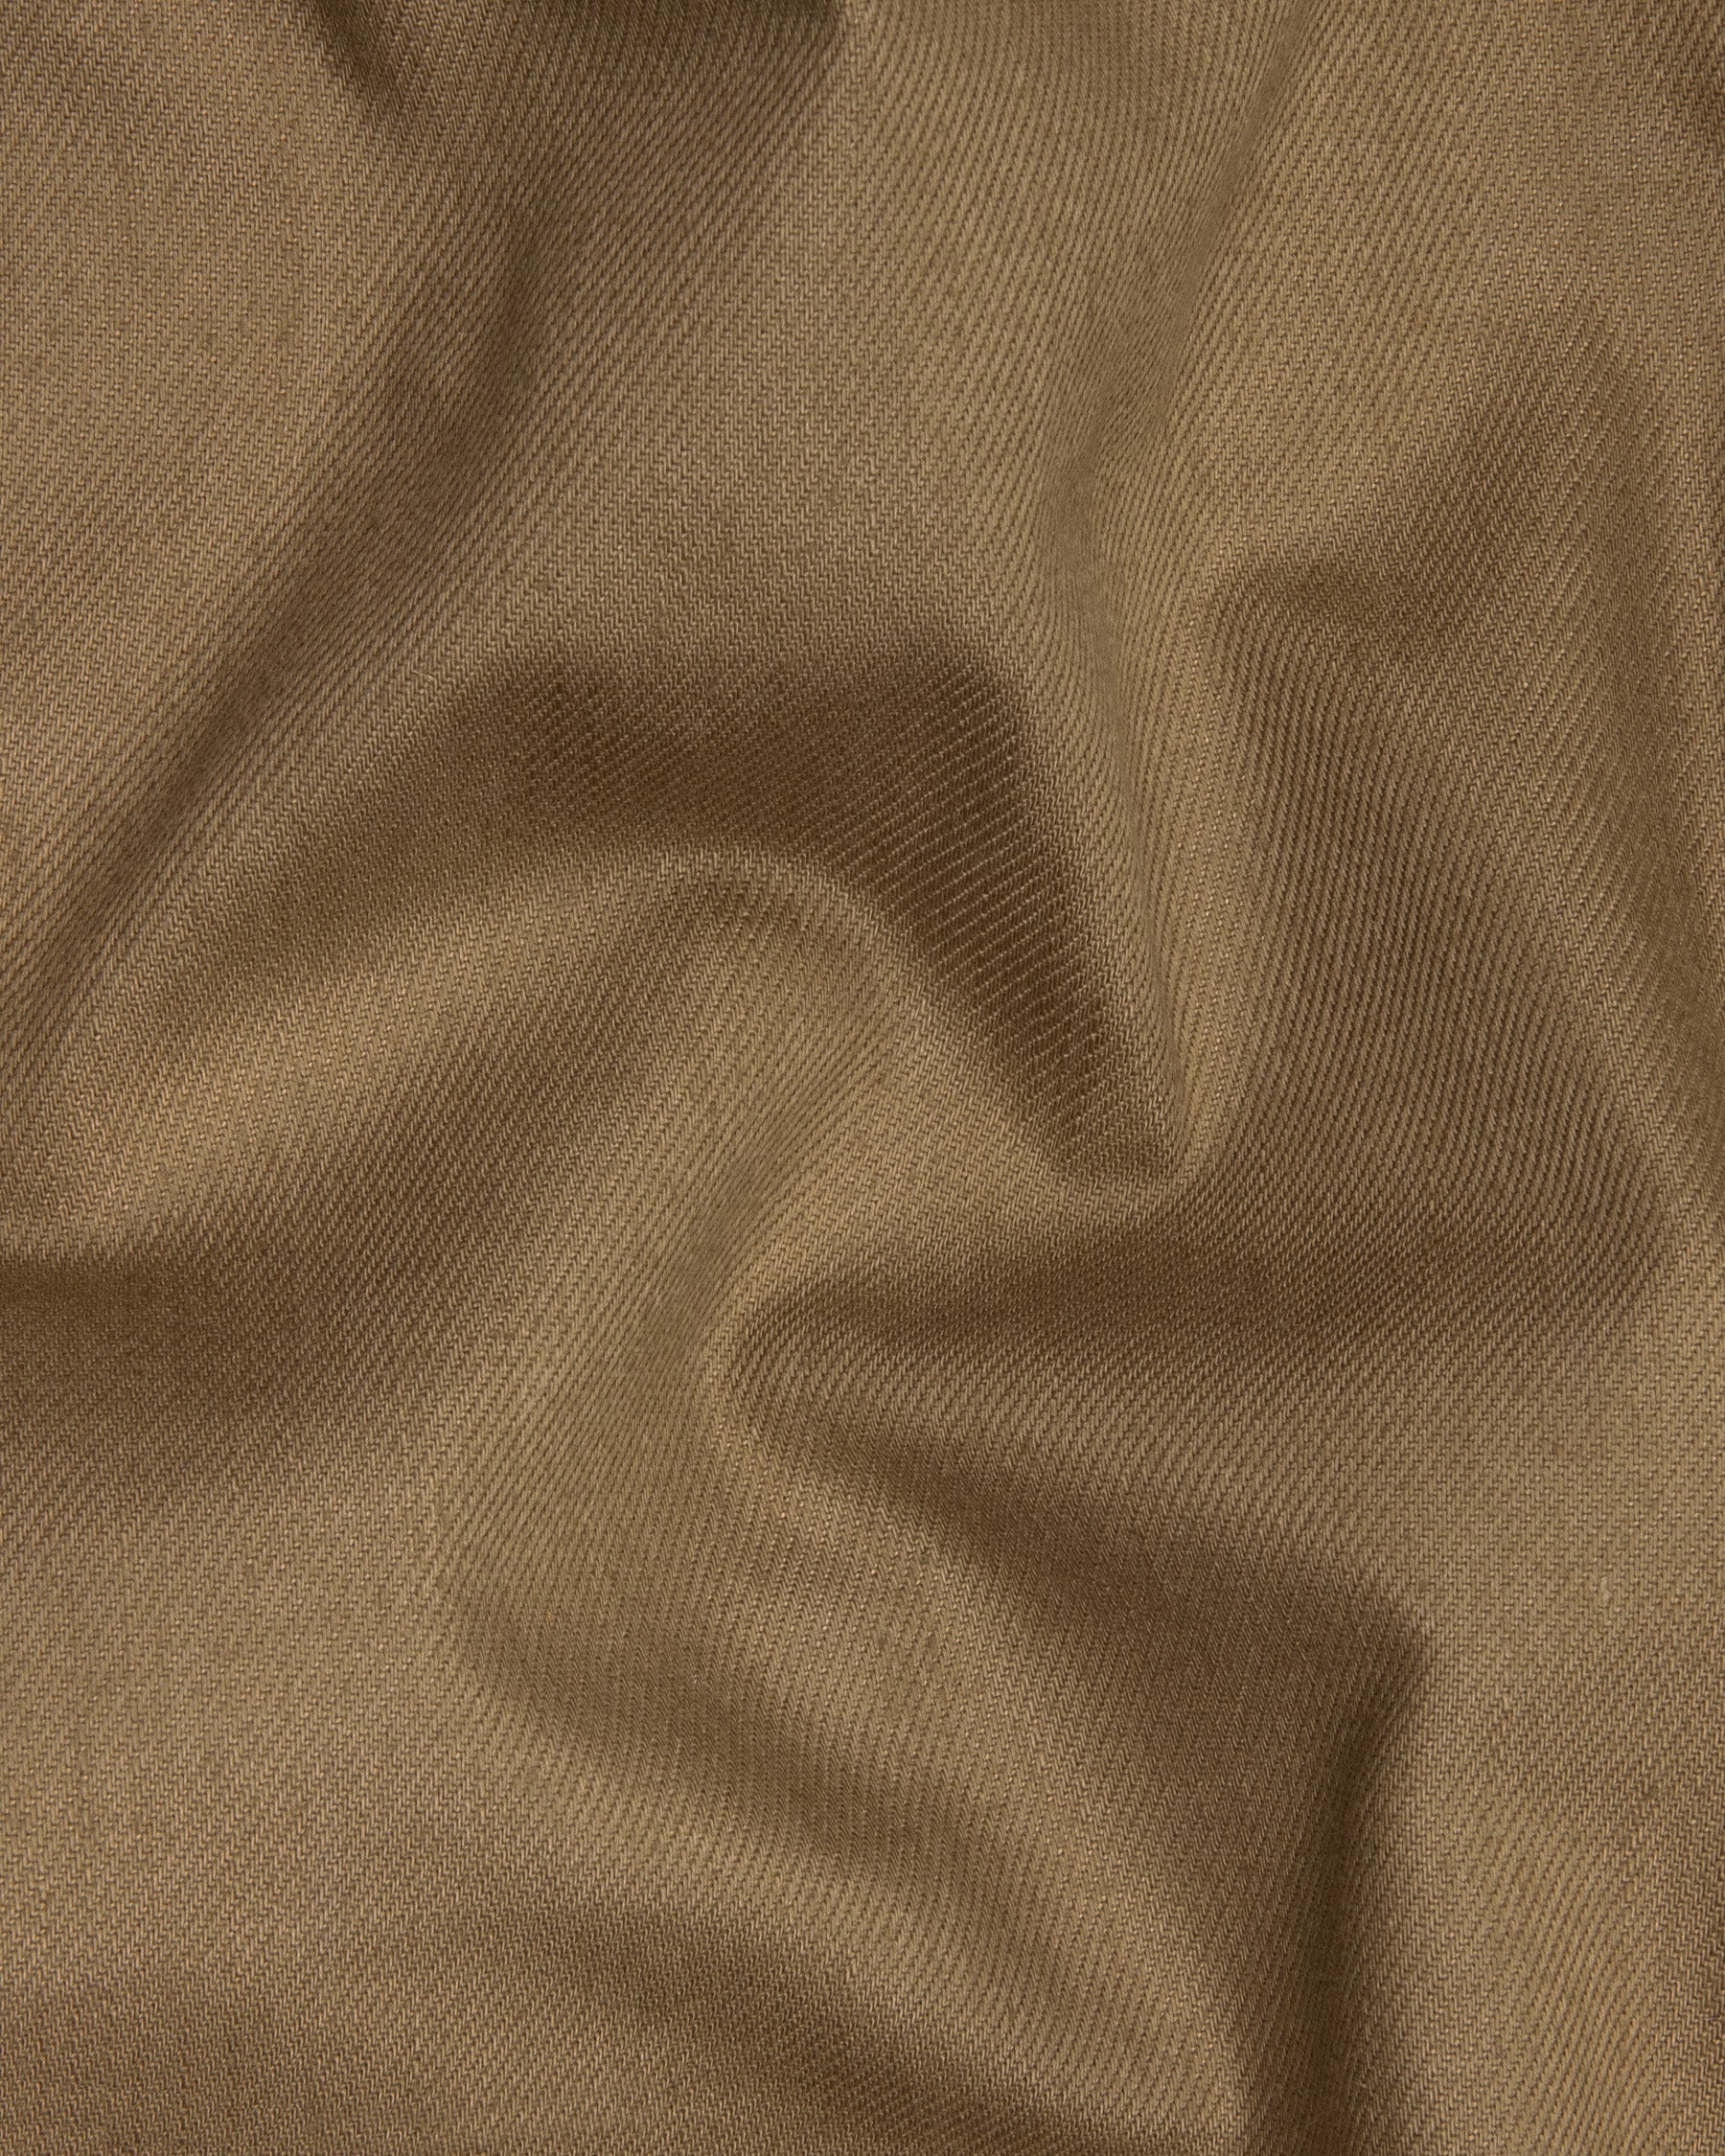 Shadow Brown Premium Cotton Solid Waistcoat V1209-36, V1209-38, V1209-40, V1209-42, V1209-44, V1209-54, V1209-52, V1209-56, V1209-58, V1209-60, V1209-46, V1209-48, V1209-50